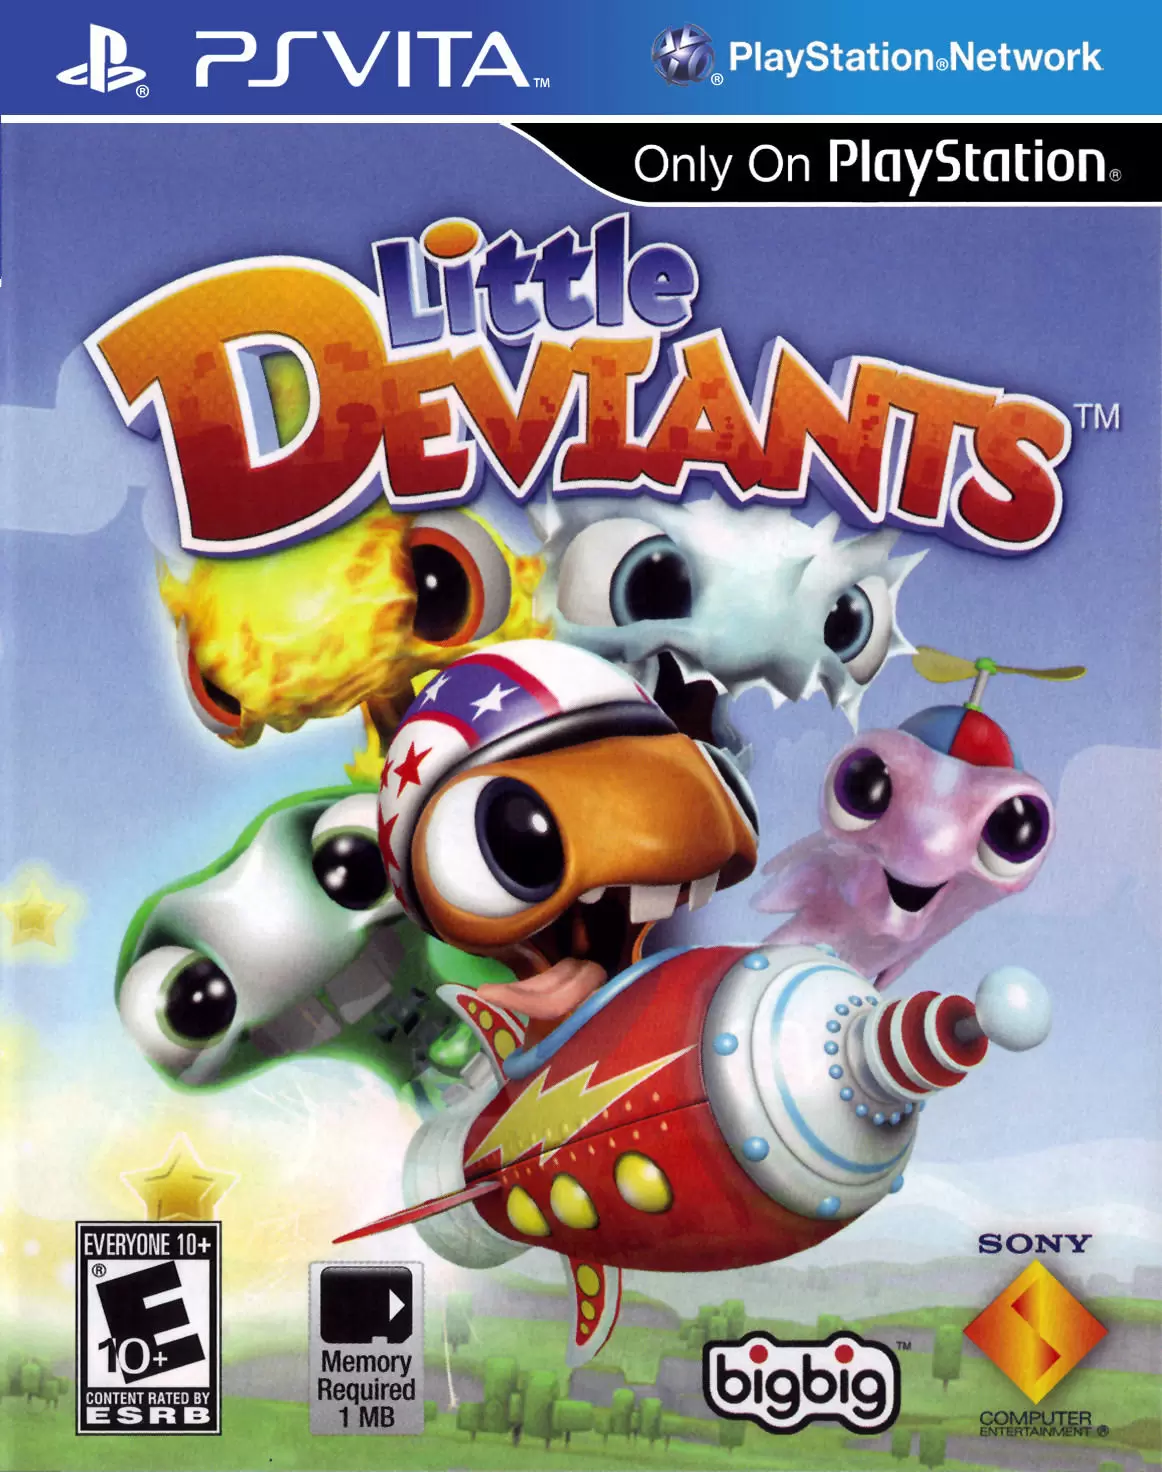 PS Vita Games - Little Deviants